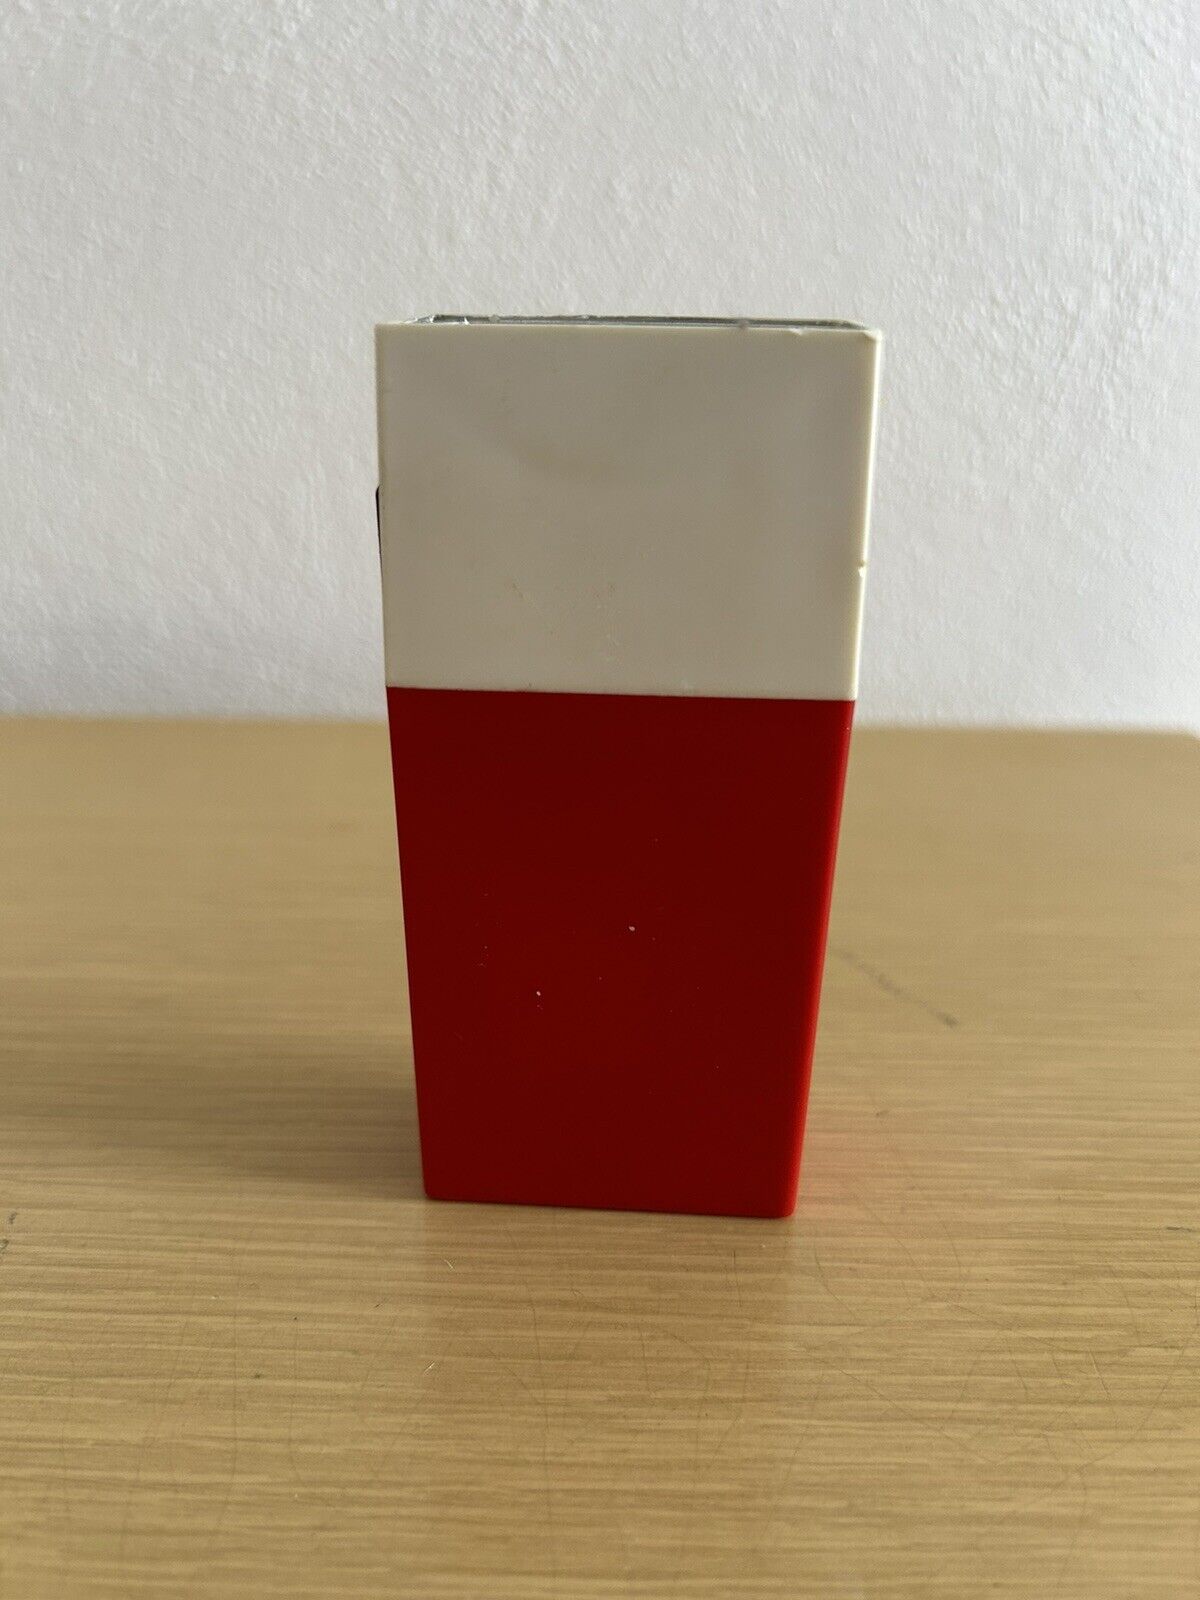 VINTAGE RAY-O-VAC RED AND WHITE PLASTIC SQUARE BOX FLASHLIGHT